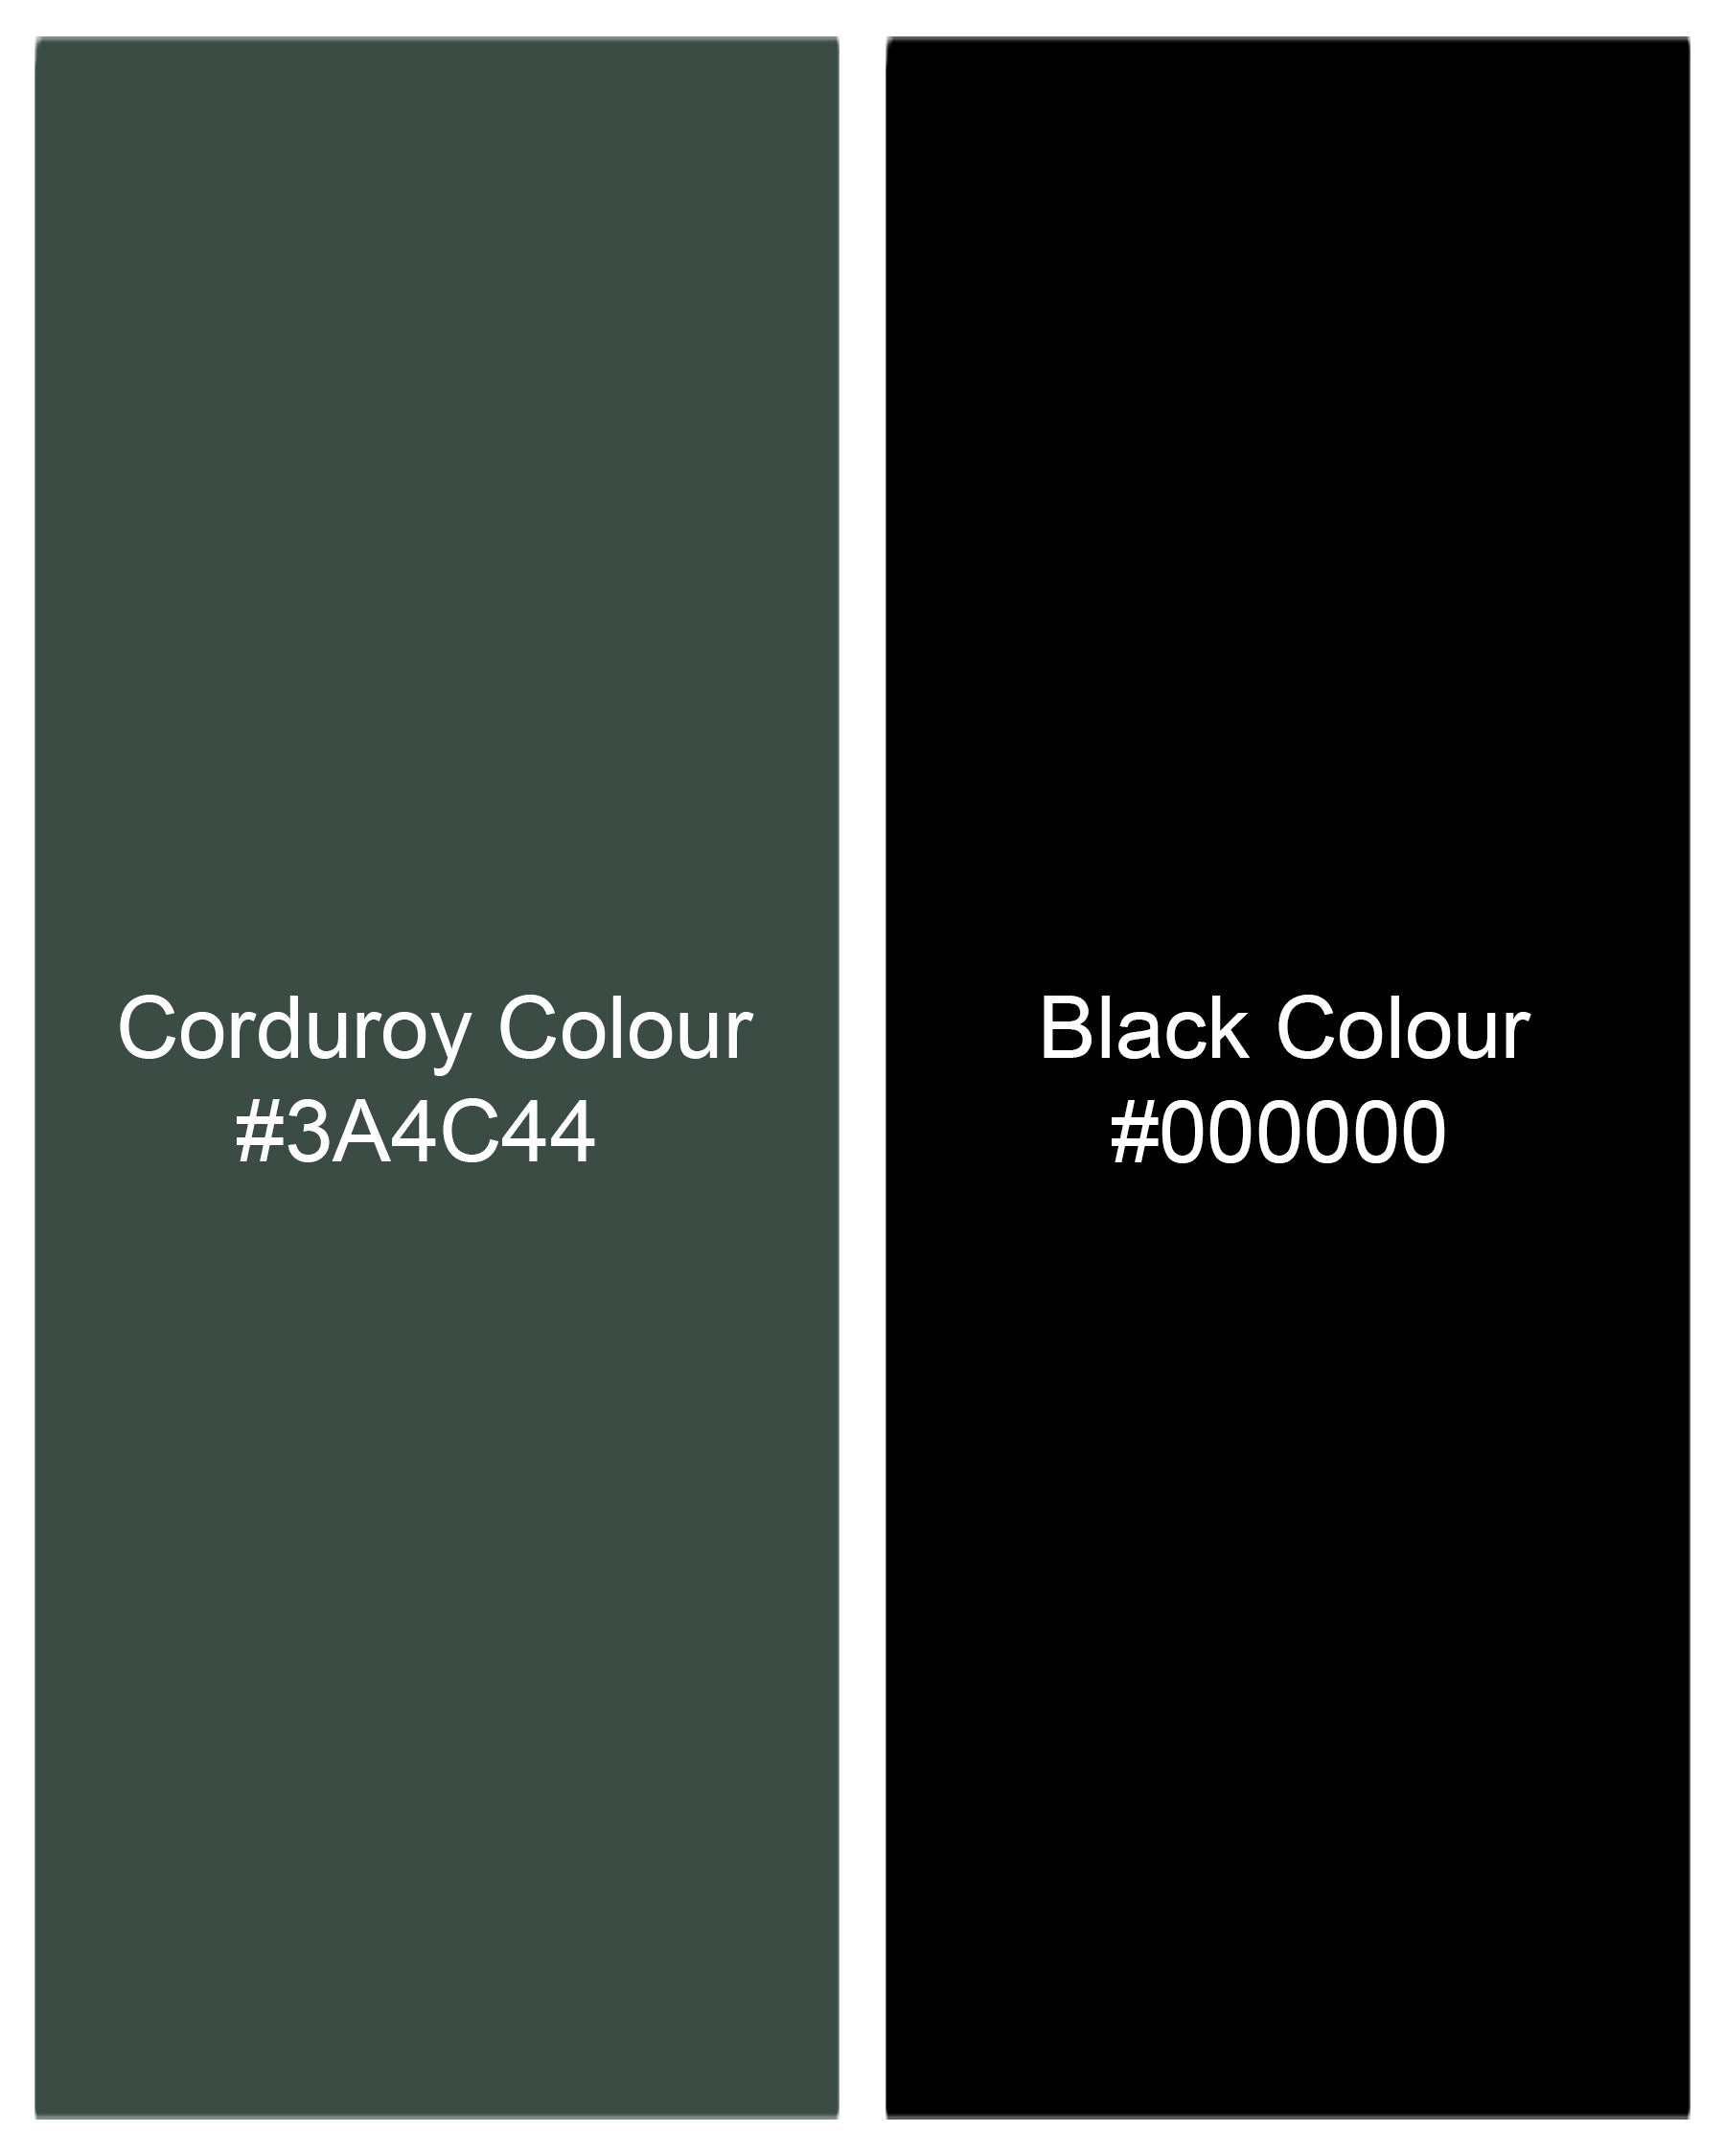 Corduroy Green With Jade Black 3D Plaid Dobby Textured Giza Cotton Designer Shirt 8011-CA-P102-38,8011-CA-P102-H-38,8011-CA-P102-39,8011-CA-P102-H-39,8011-CA-P102-40,8011-CA-P102-H-40,8011-CA-P102-42,8011-CA-P102-H-42,8011-CA-P102-44,8011-CA-P102-H-44,8011-CA-P102-46,8011-CA-P102-H-46,8011-CA-P102-48,8011-CA-P102-H-48,8011-CA-P102-50,8011-CA-P102-H-50,8011-CA-P102-52,8011-CA-P102-H-52